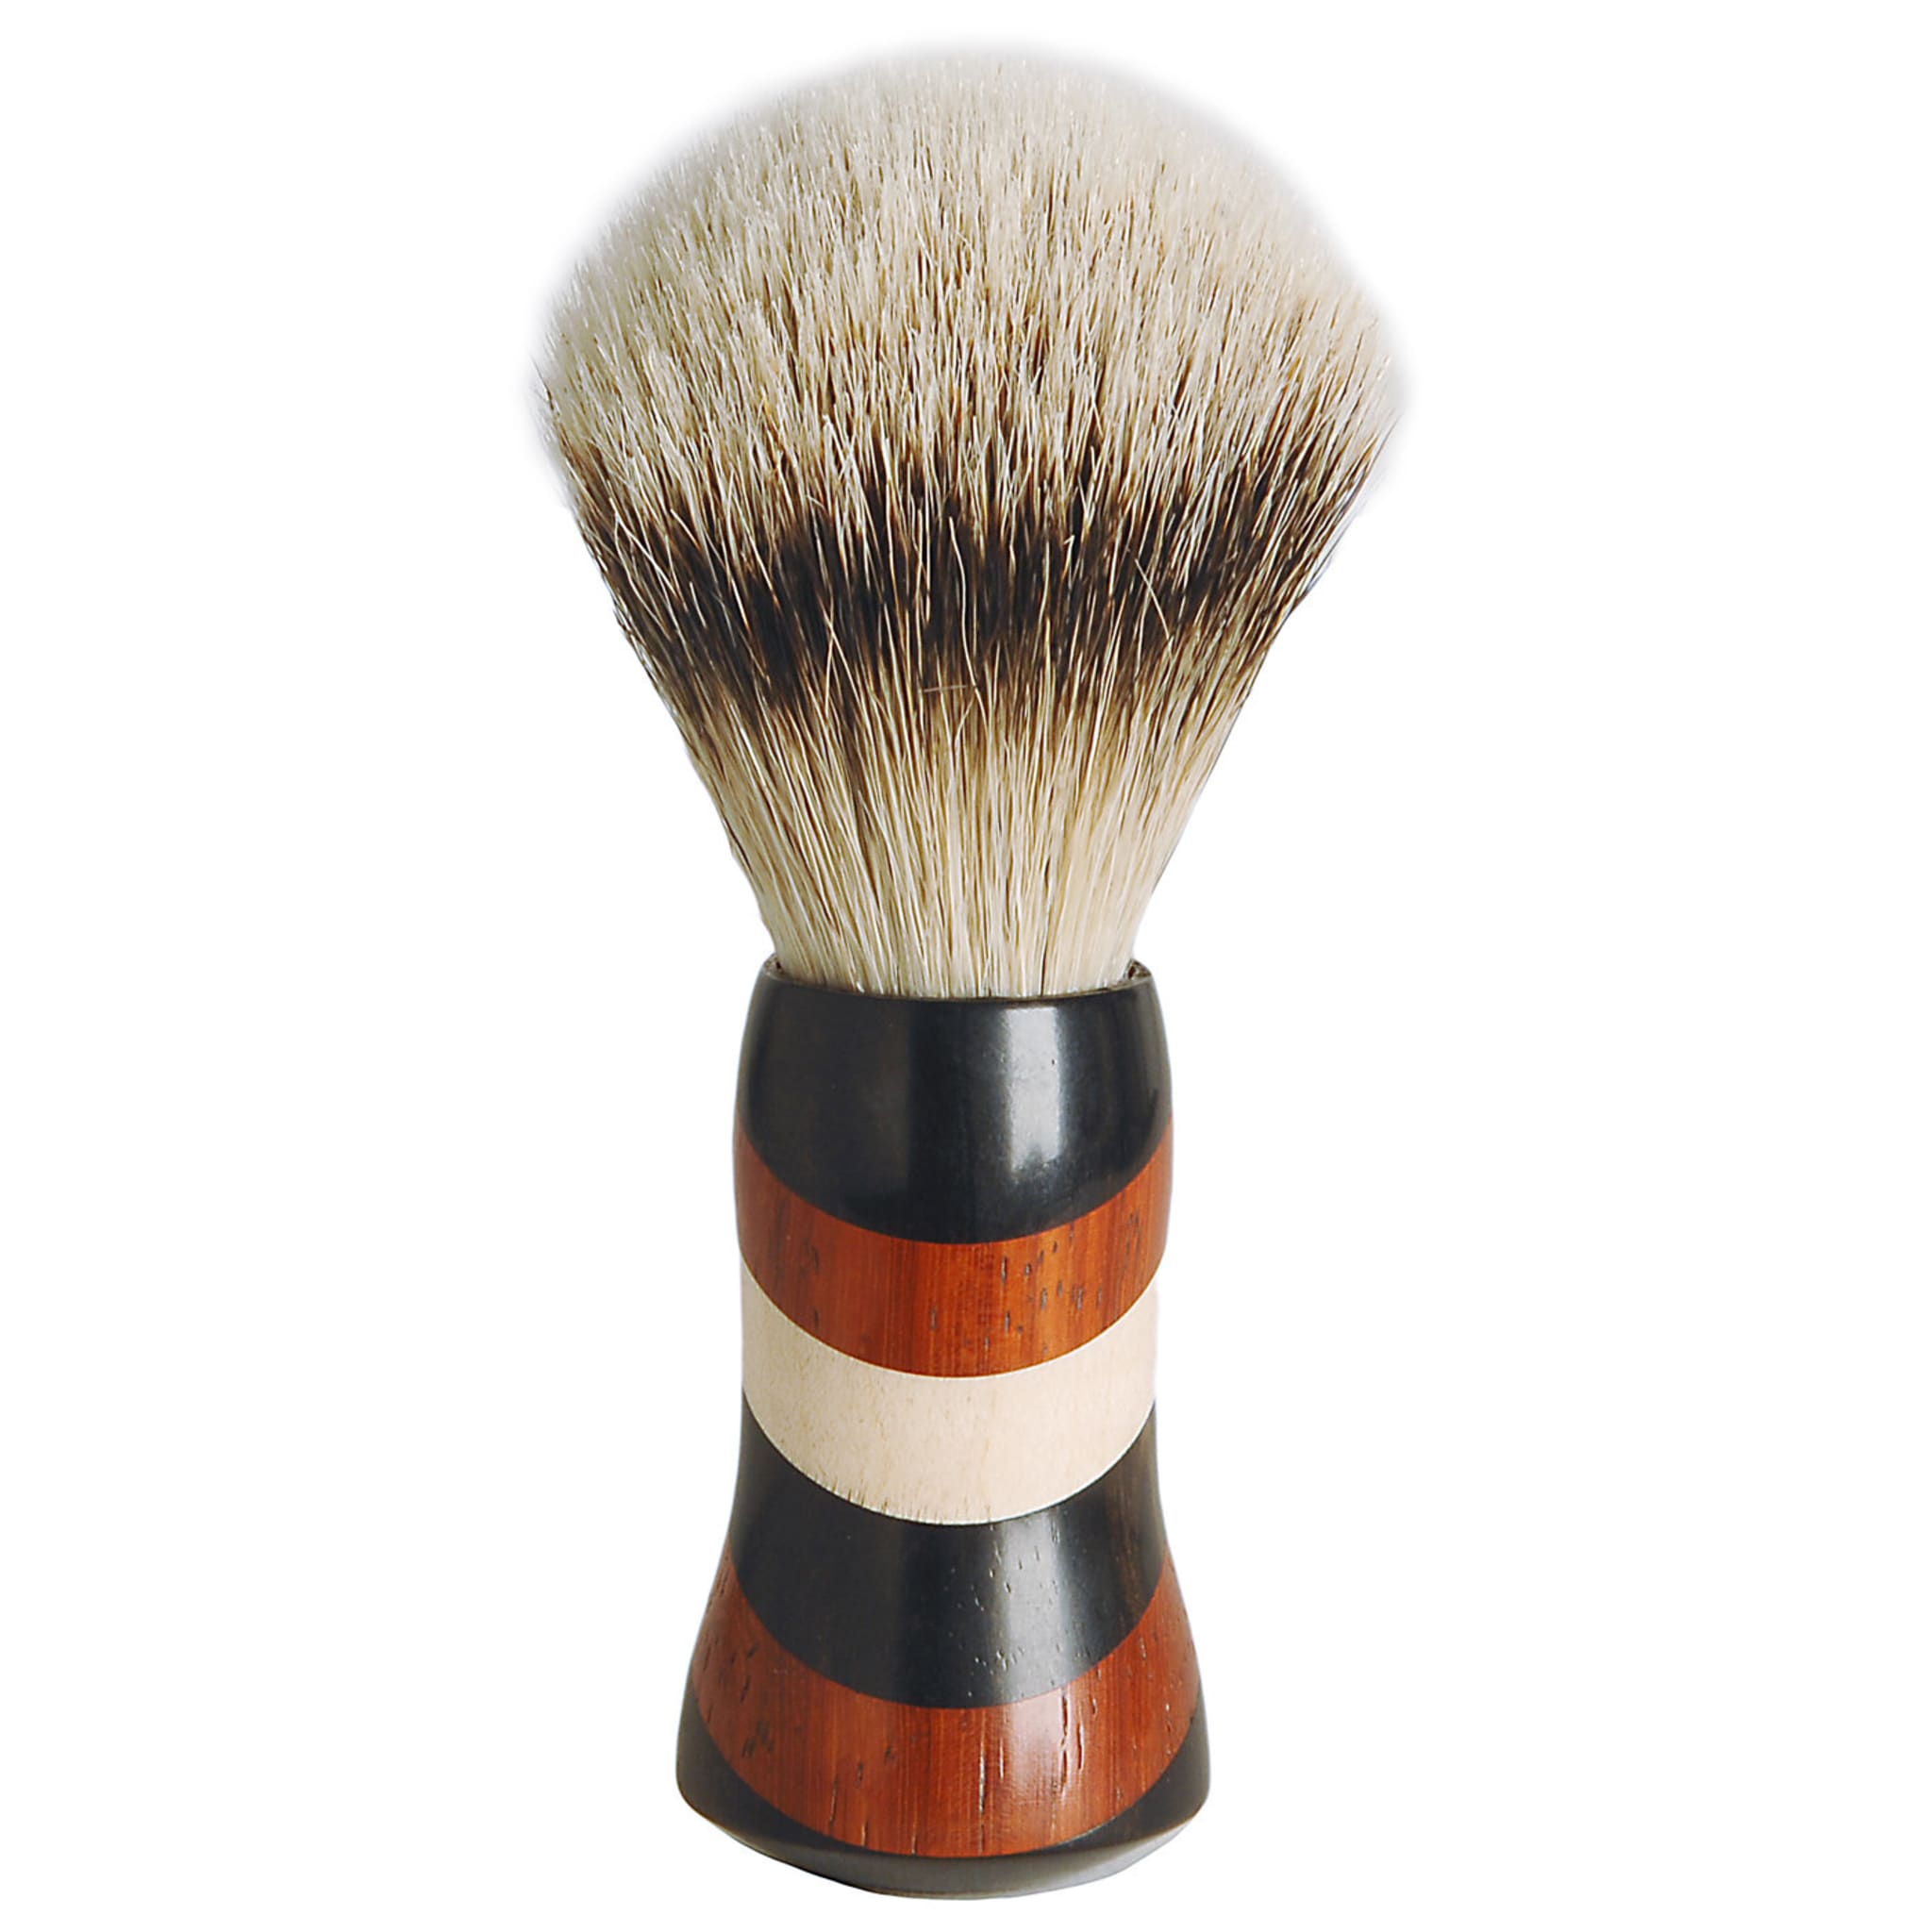 Tall Shaving Brush in Ebony, Maple and Padauk Wood - Alternative view 1